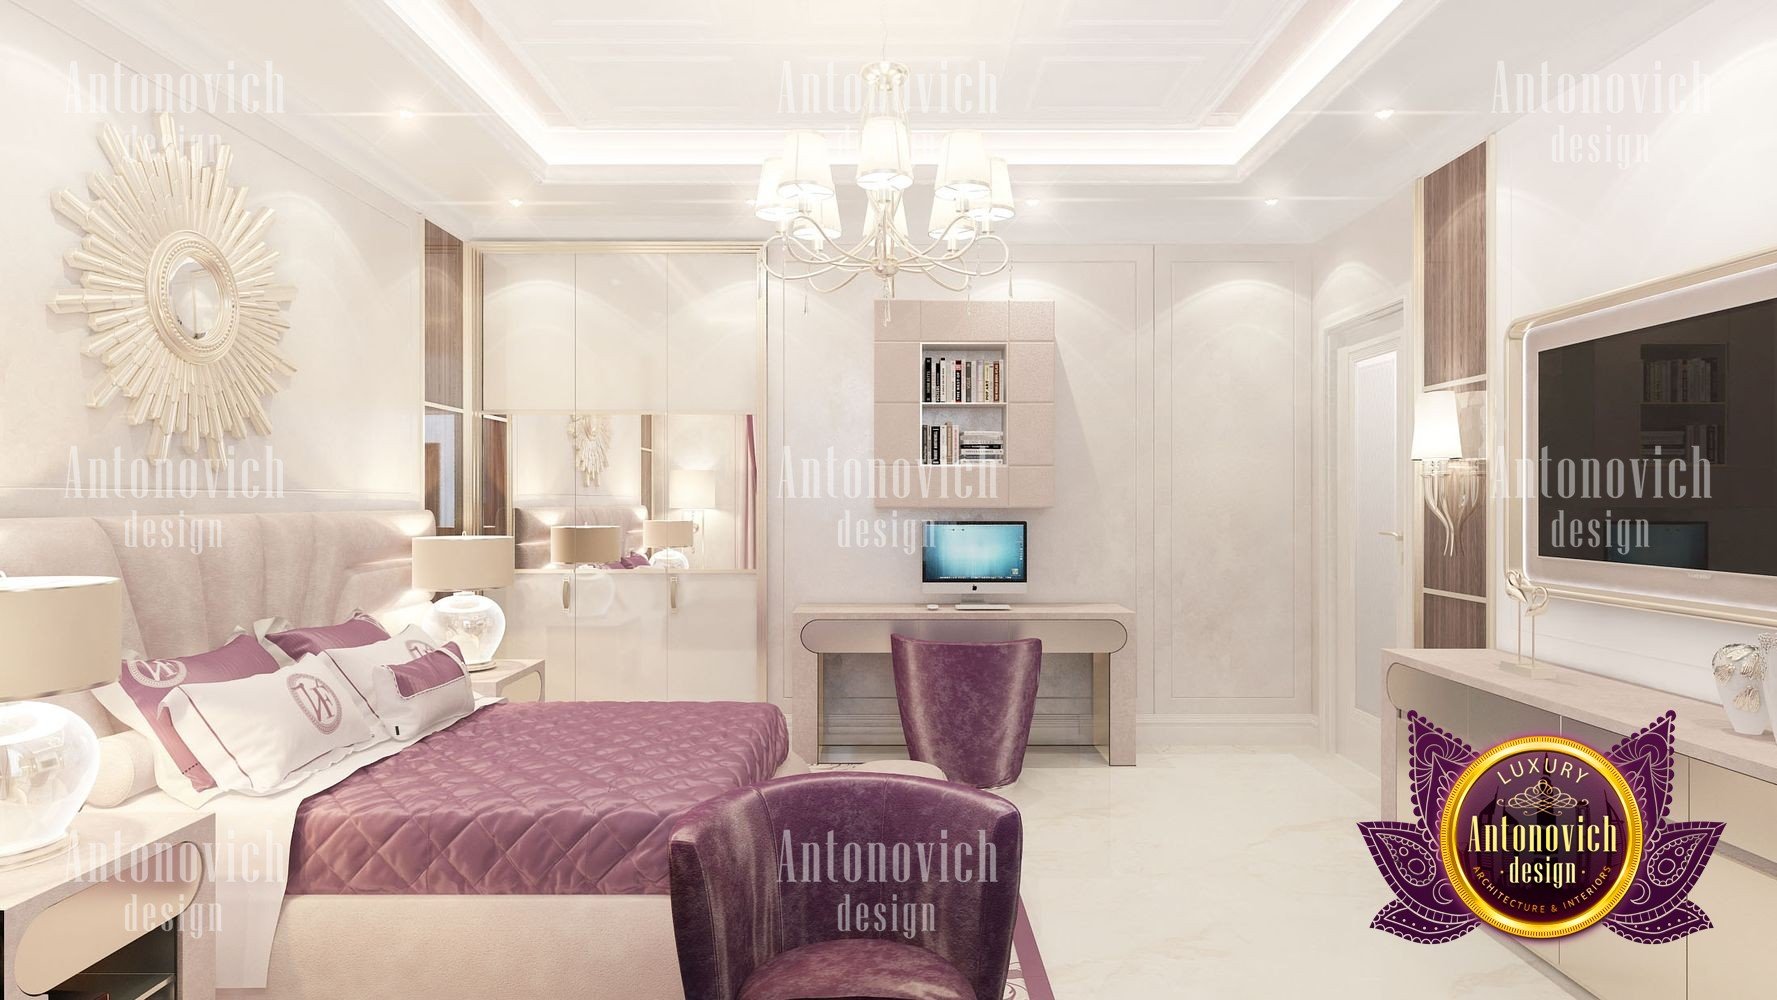 Elegant living room with plush furnishings and stylish decor